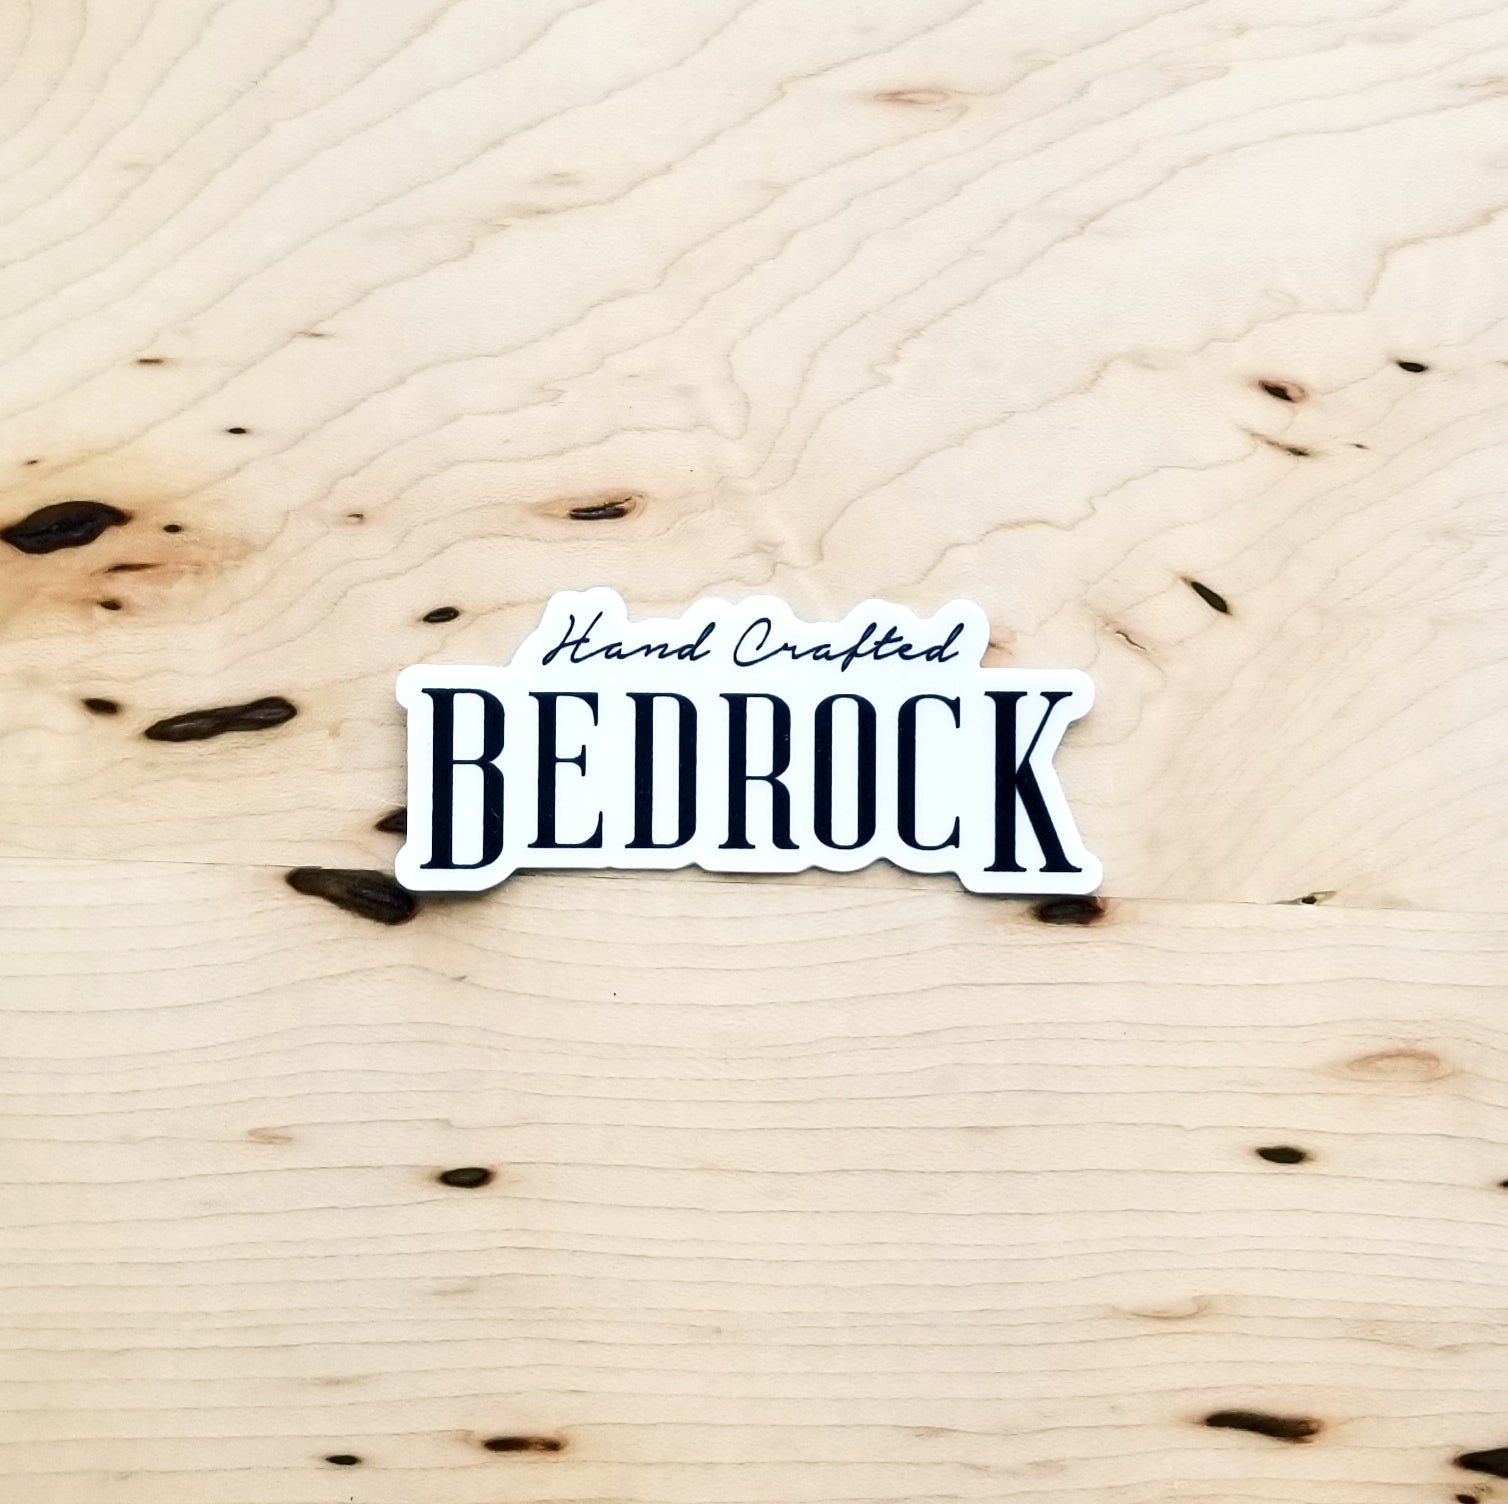 Bedrock Vinyl Sticker